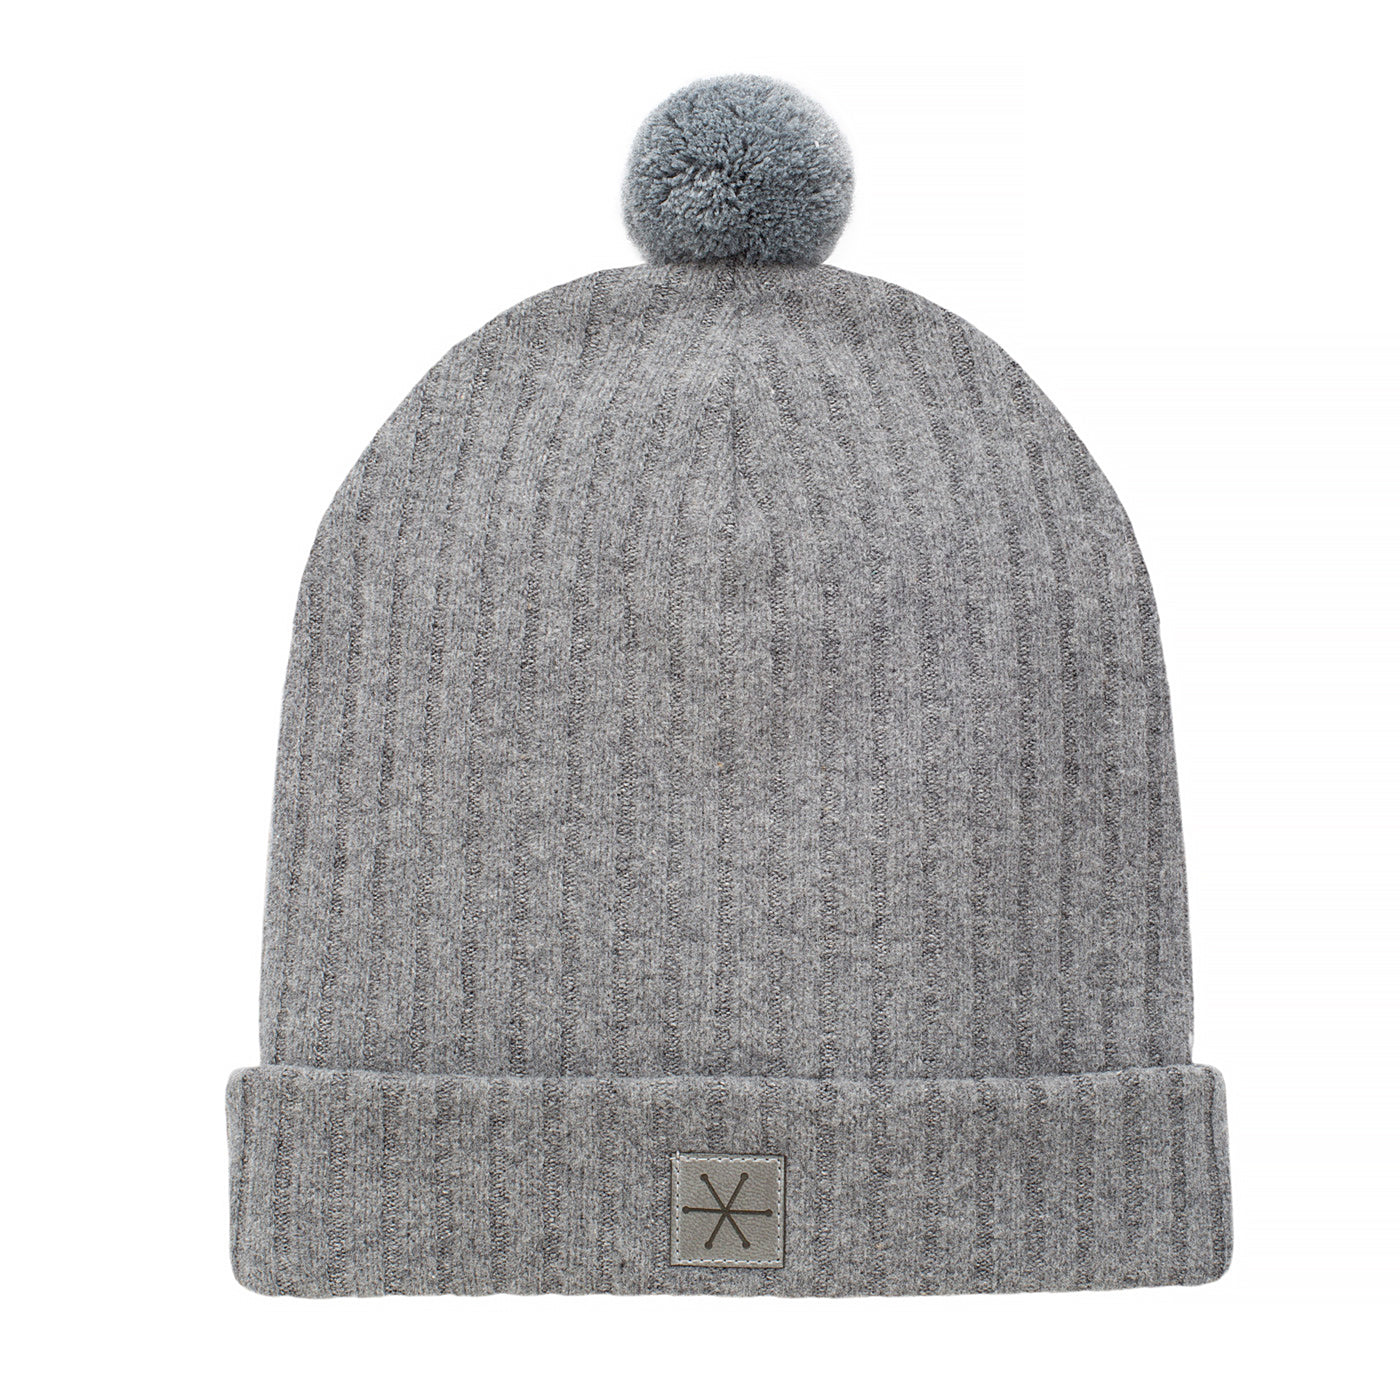 Gray Pom Pom Winter Hat